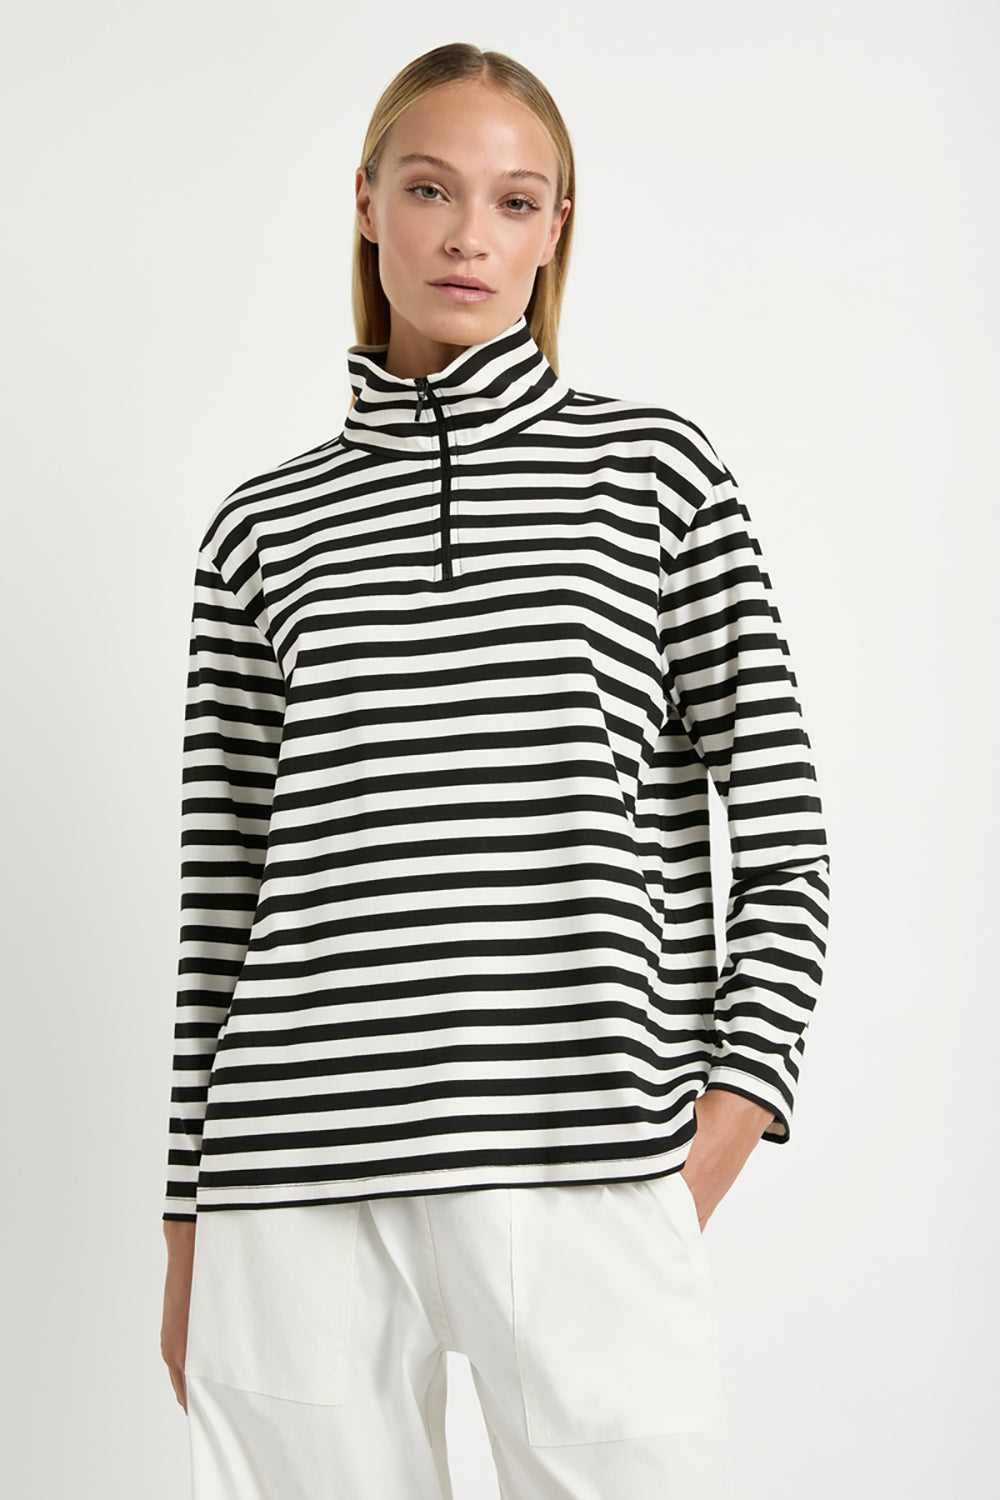 Mela Purdie Half Zip Sweater in Beval Stripe Milk/Black F530 8259 - Pre Order April Delivery